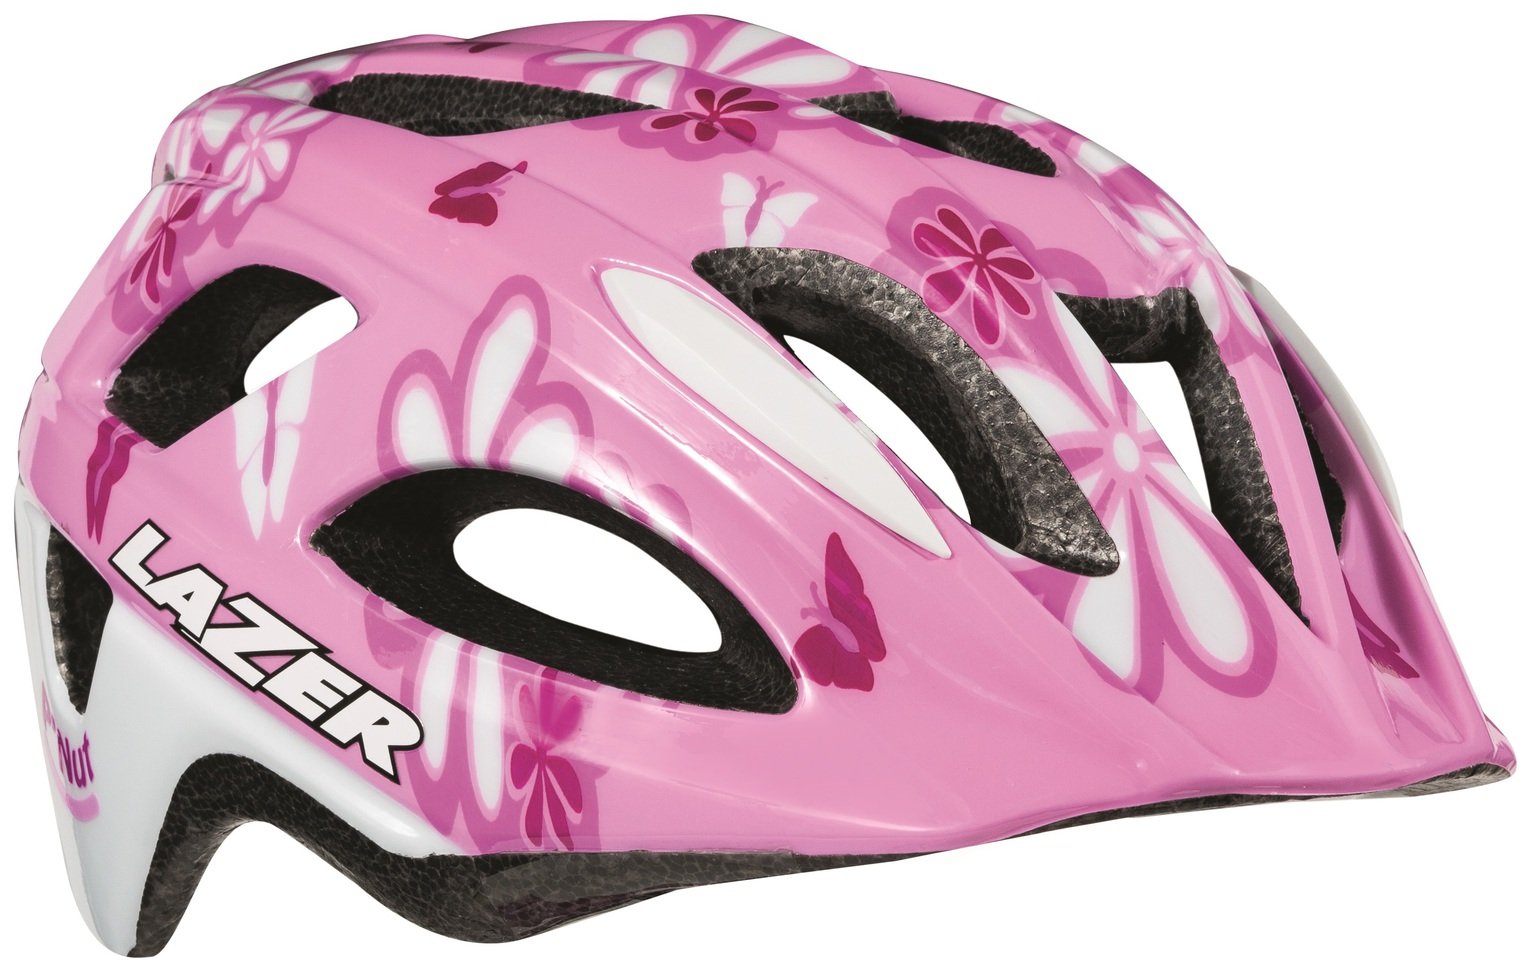 Lazer P Nuts Kids Bike Helmet review